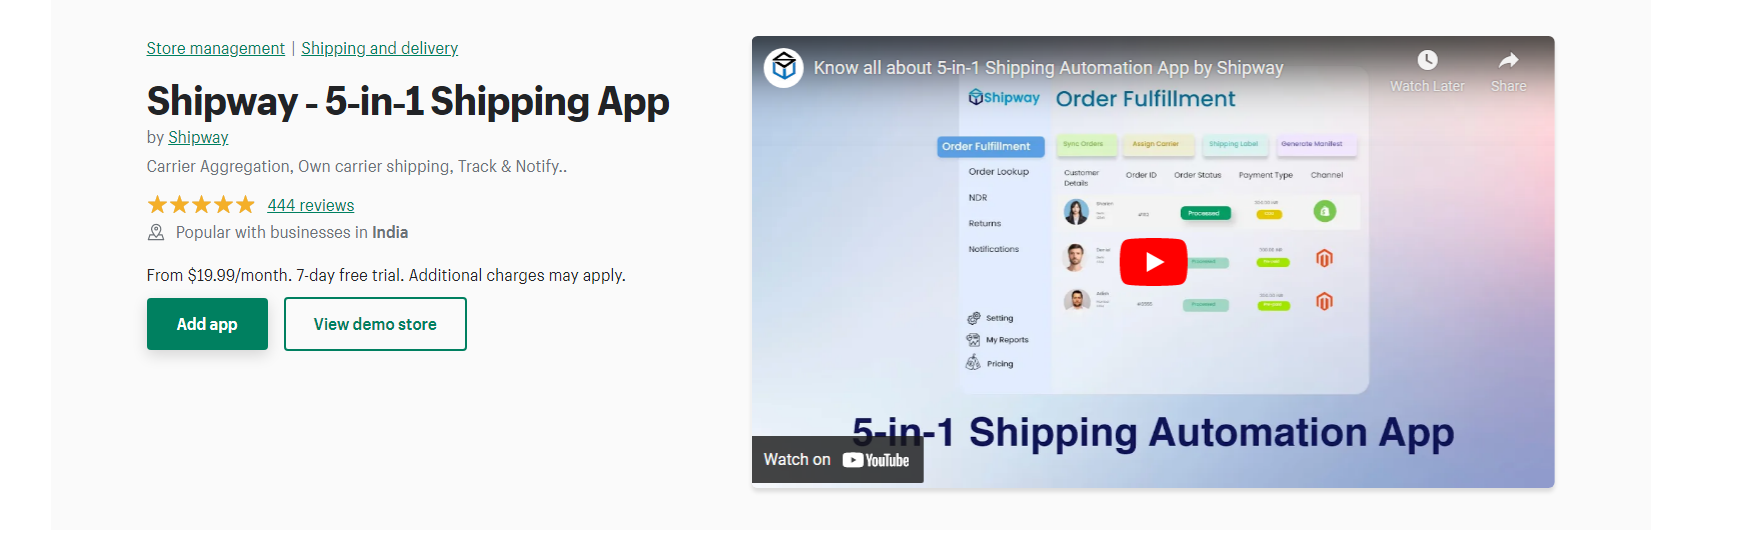 Shipway - Shopify Returns Apps